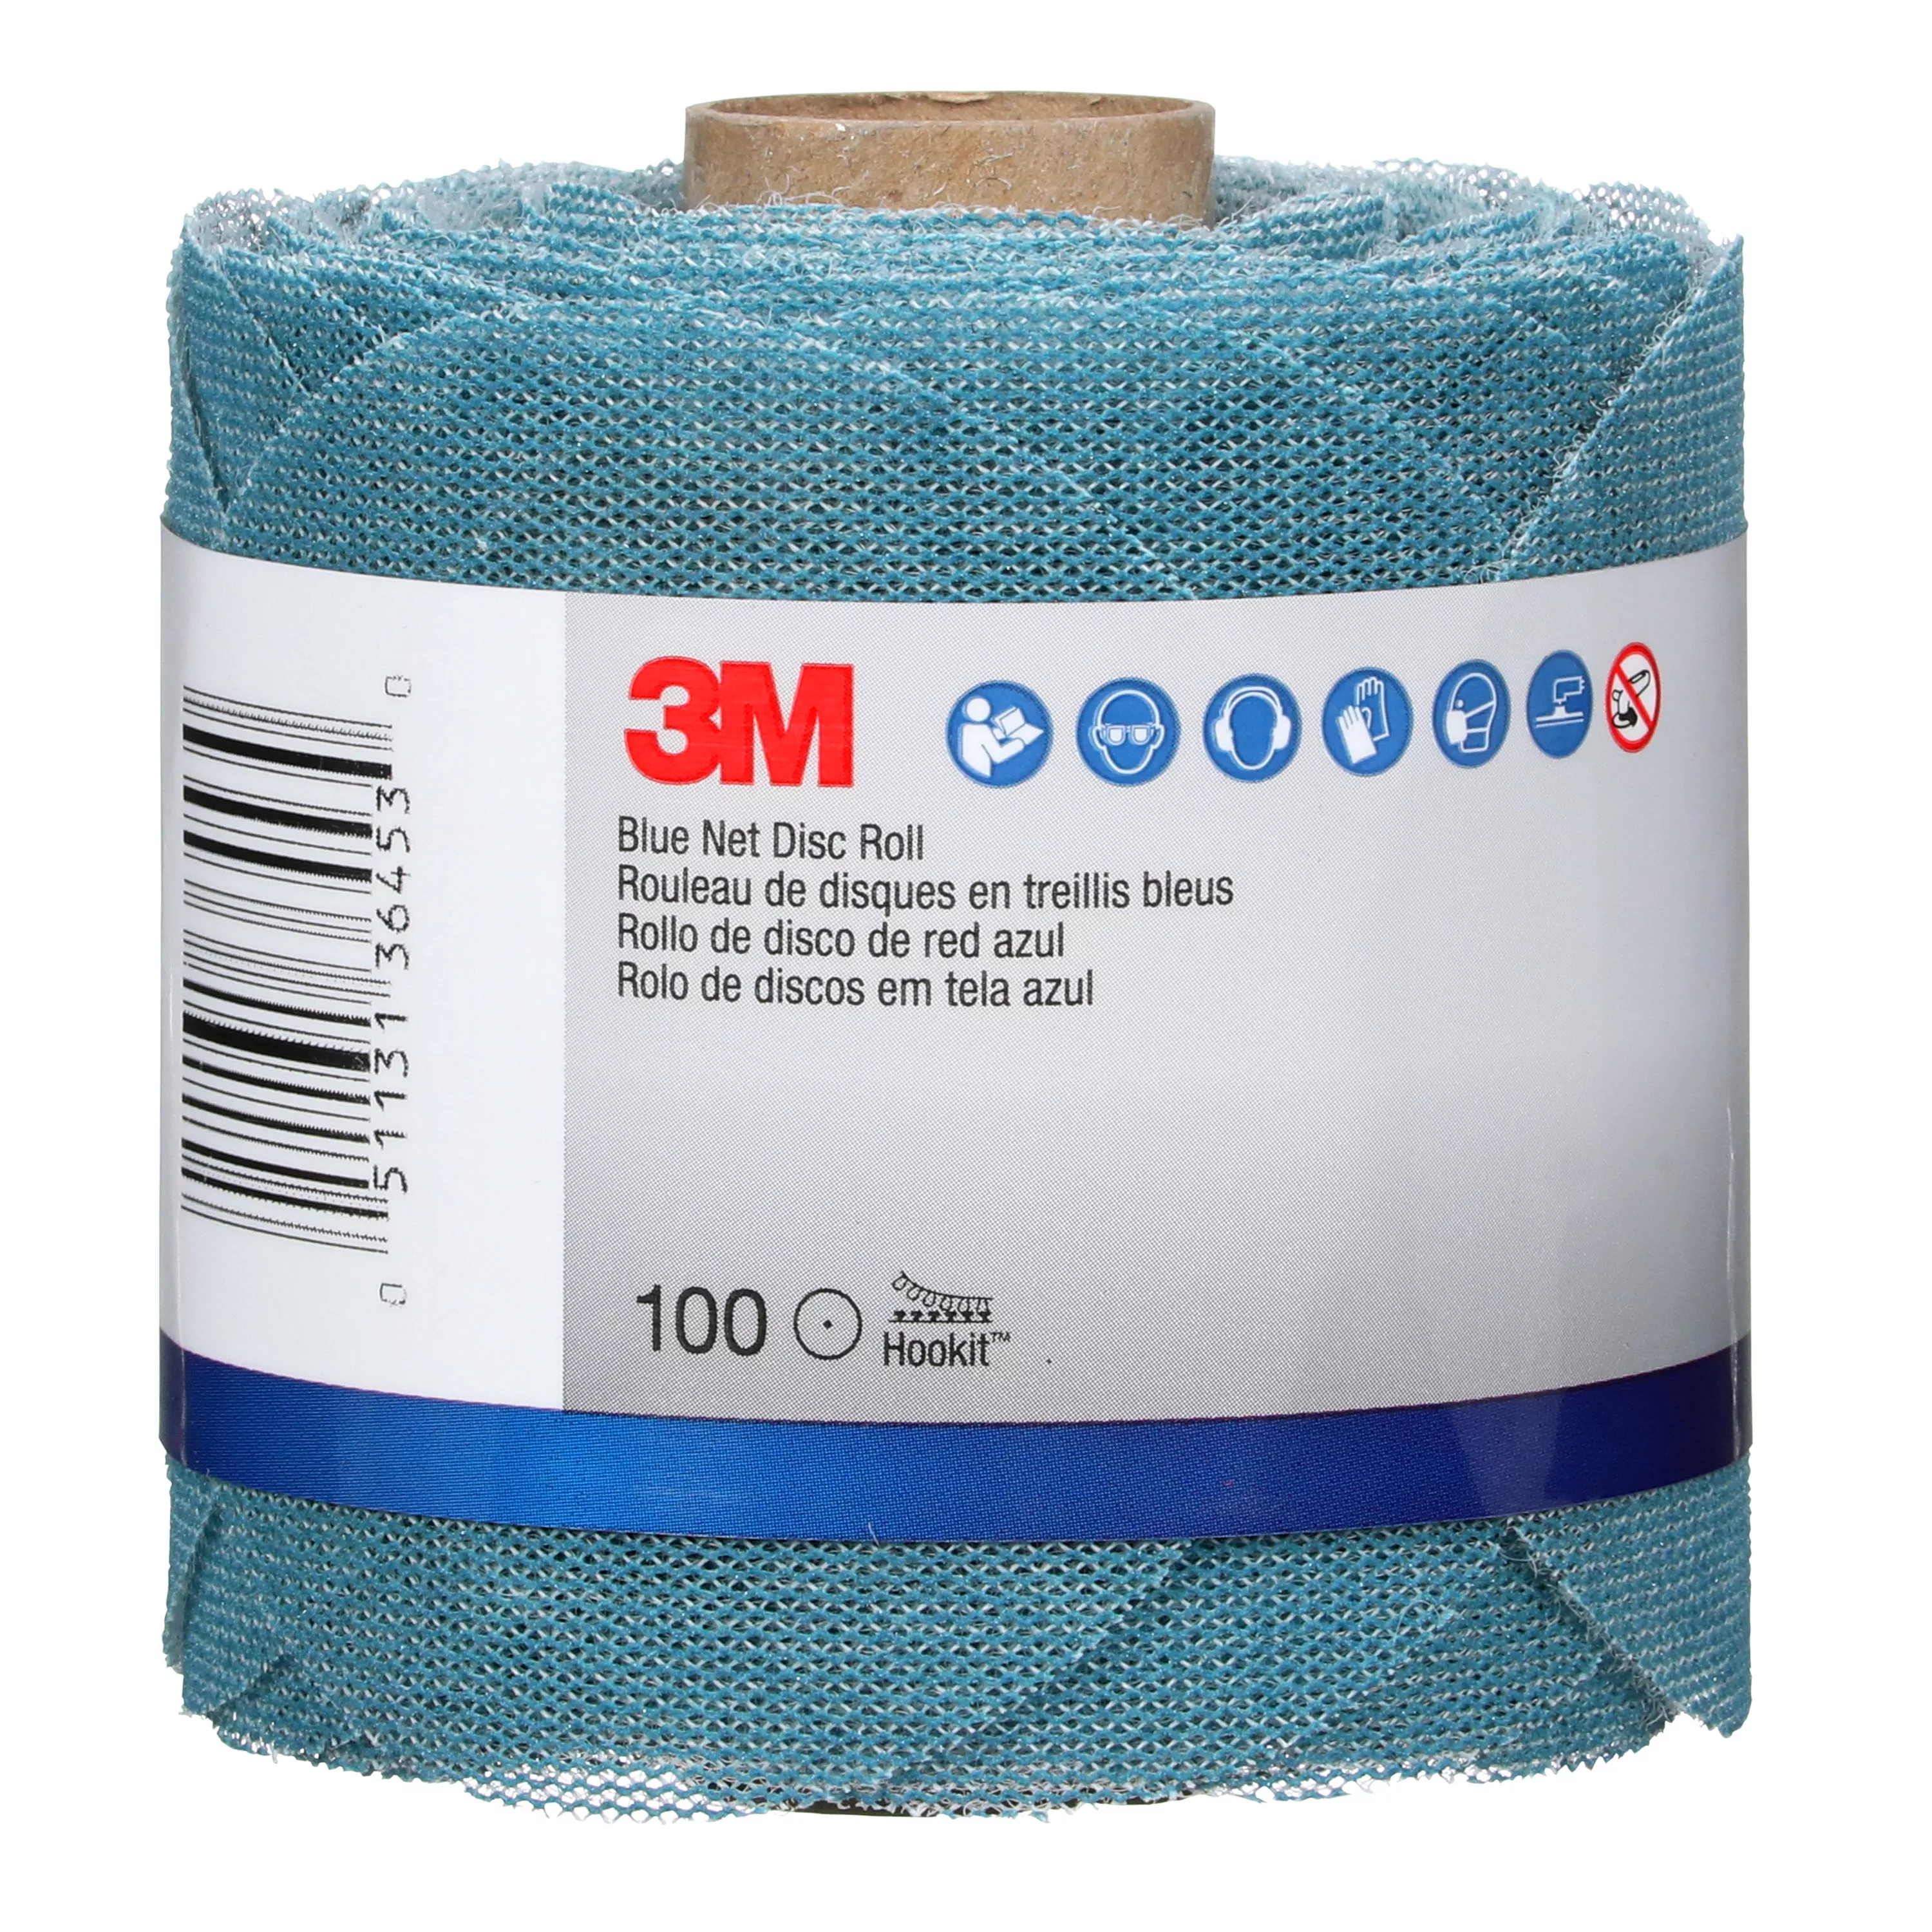 SKU 7100254368 | 3M™ Blue Net Disc Roll 36453